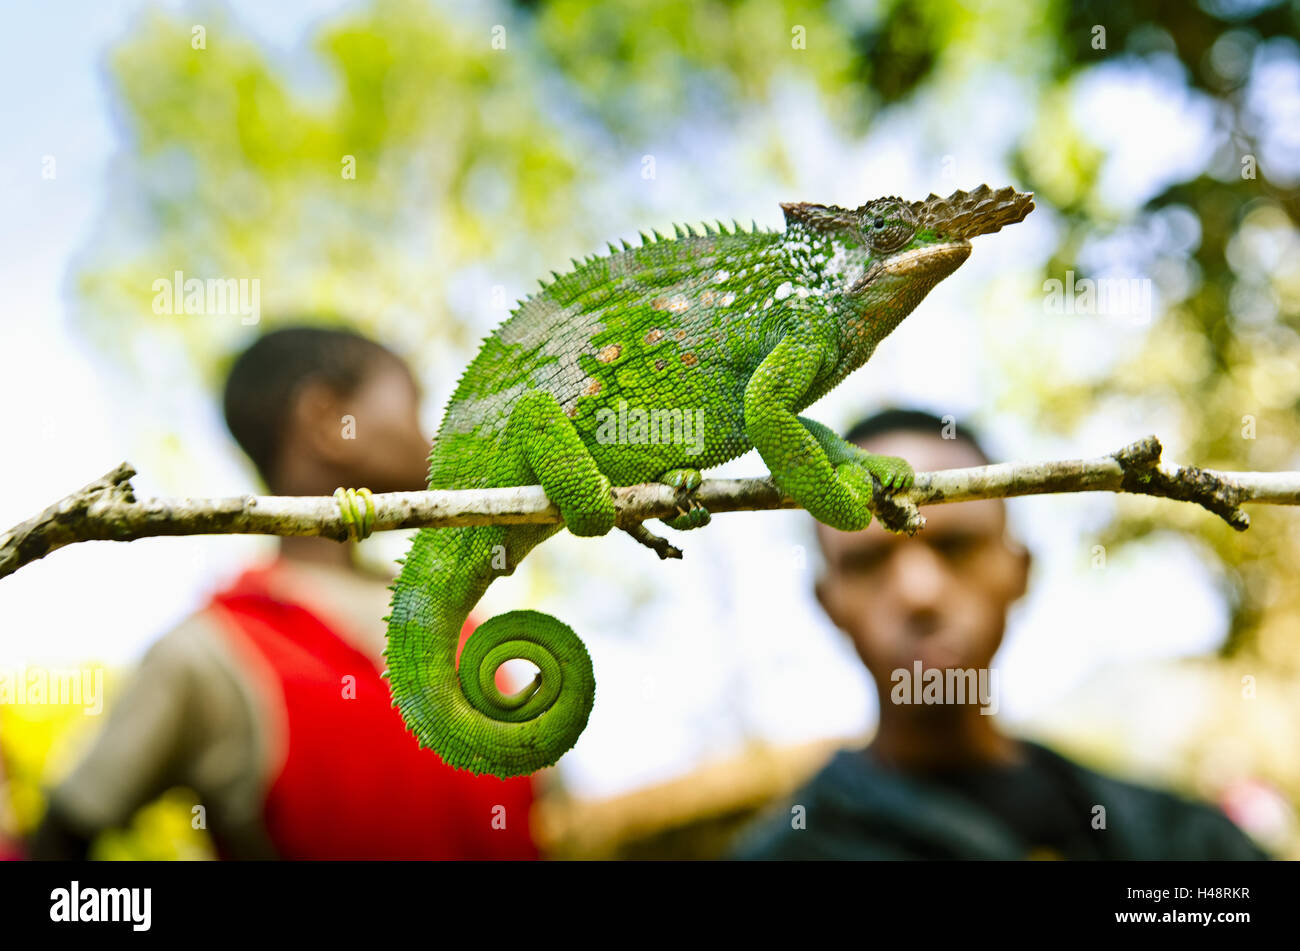 Africa, East Africa, Tanzania, Usambara Mountains, animal, reptile, chameleon, Stock Photo